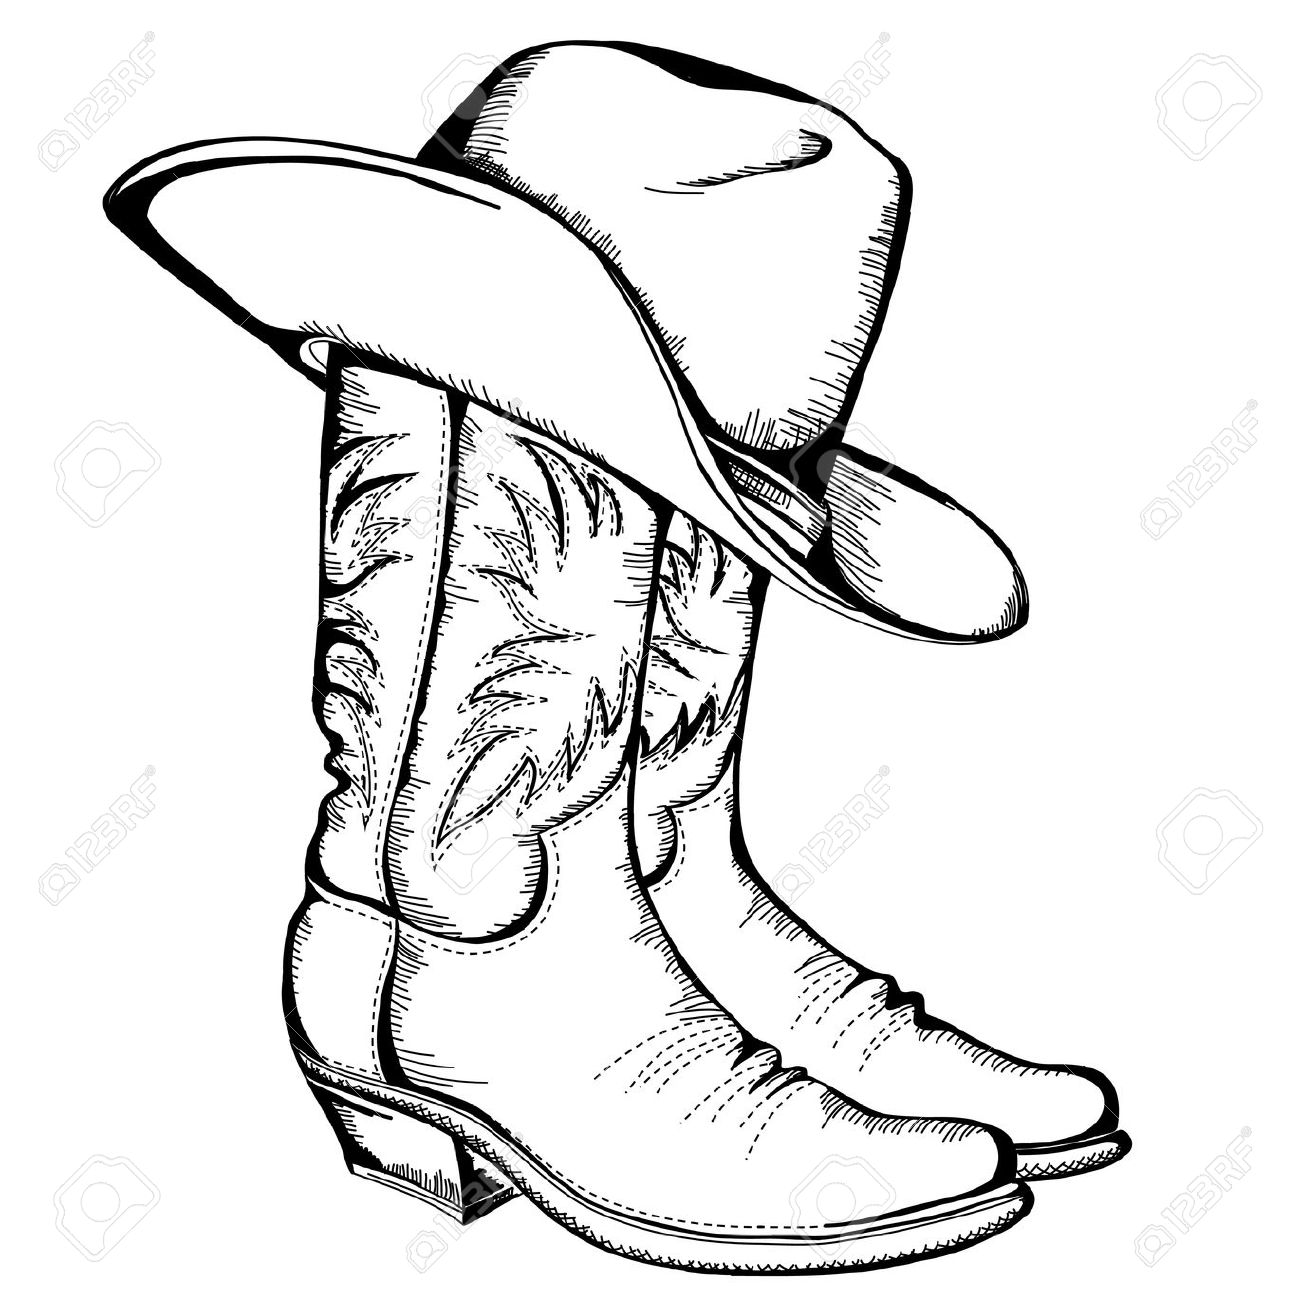 cowboy boots: Cowboy boots and .